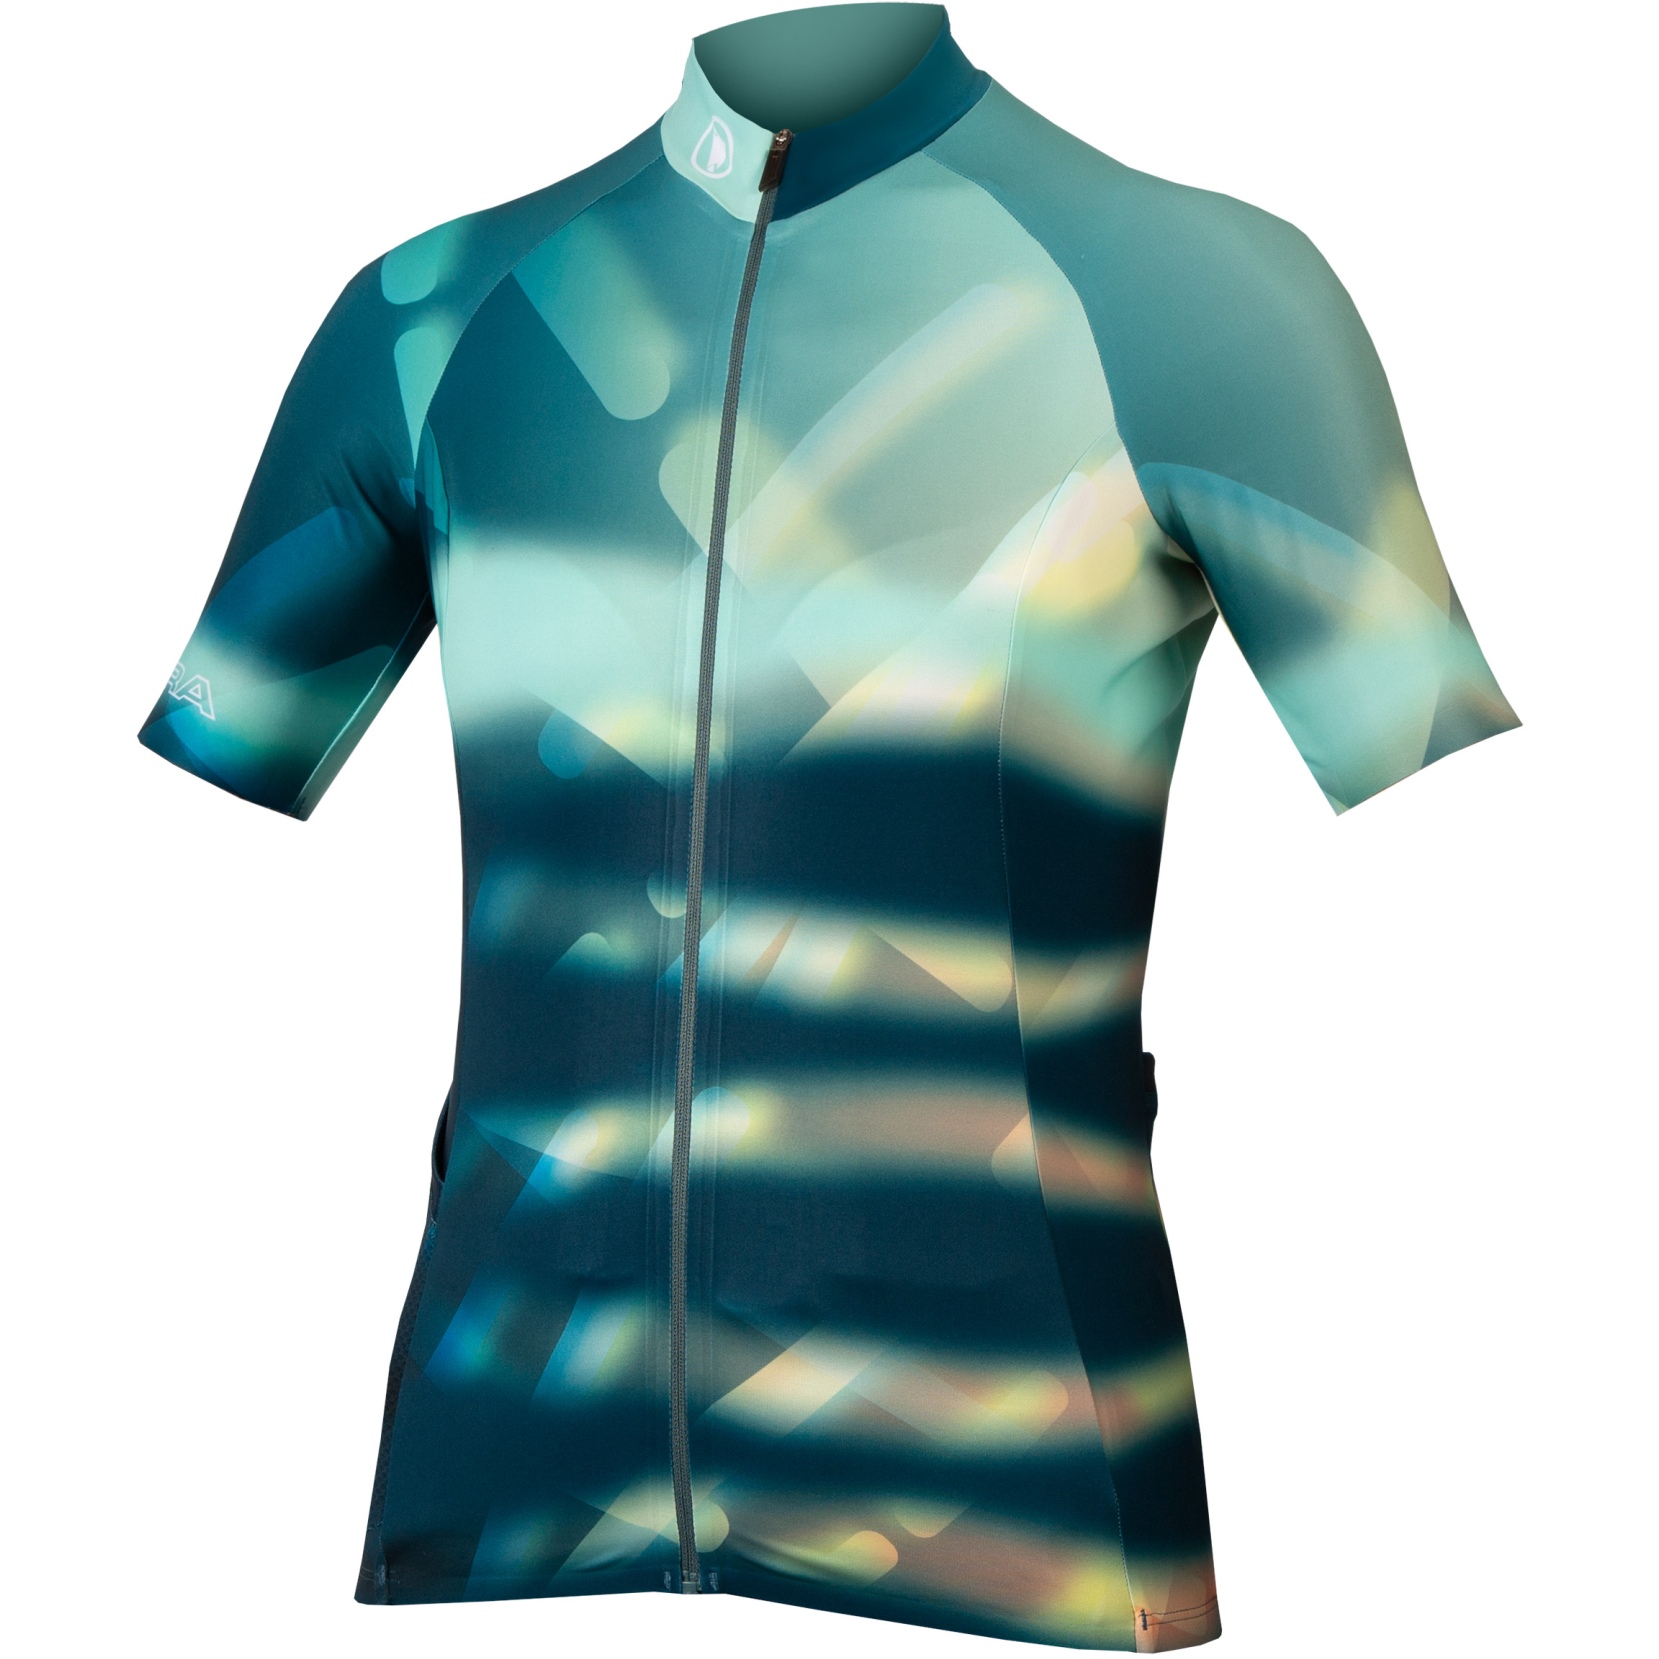 Productfoto van Endura Virtual Texture Trui met Korte Mouwen Dames - glacier blue